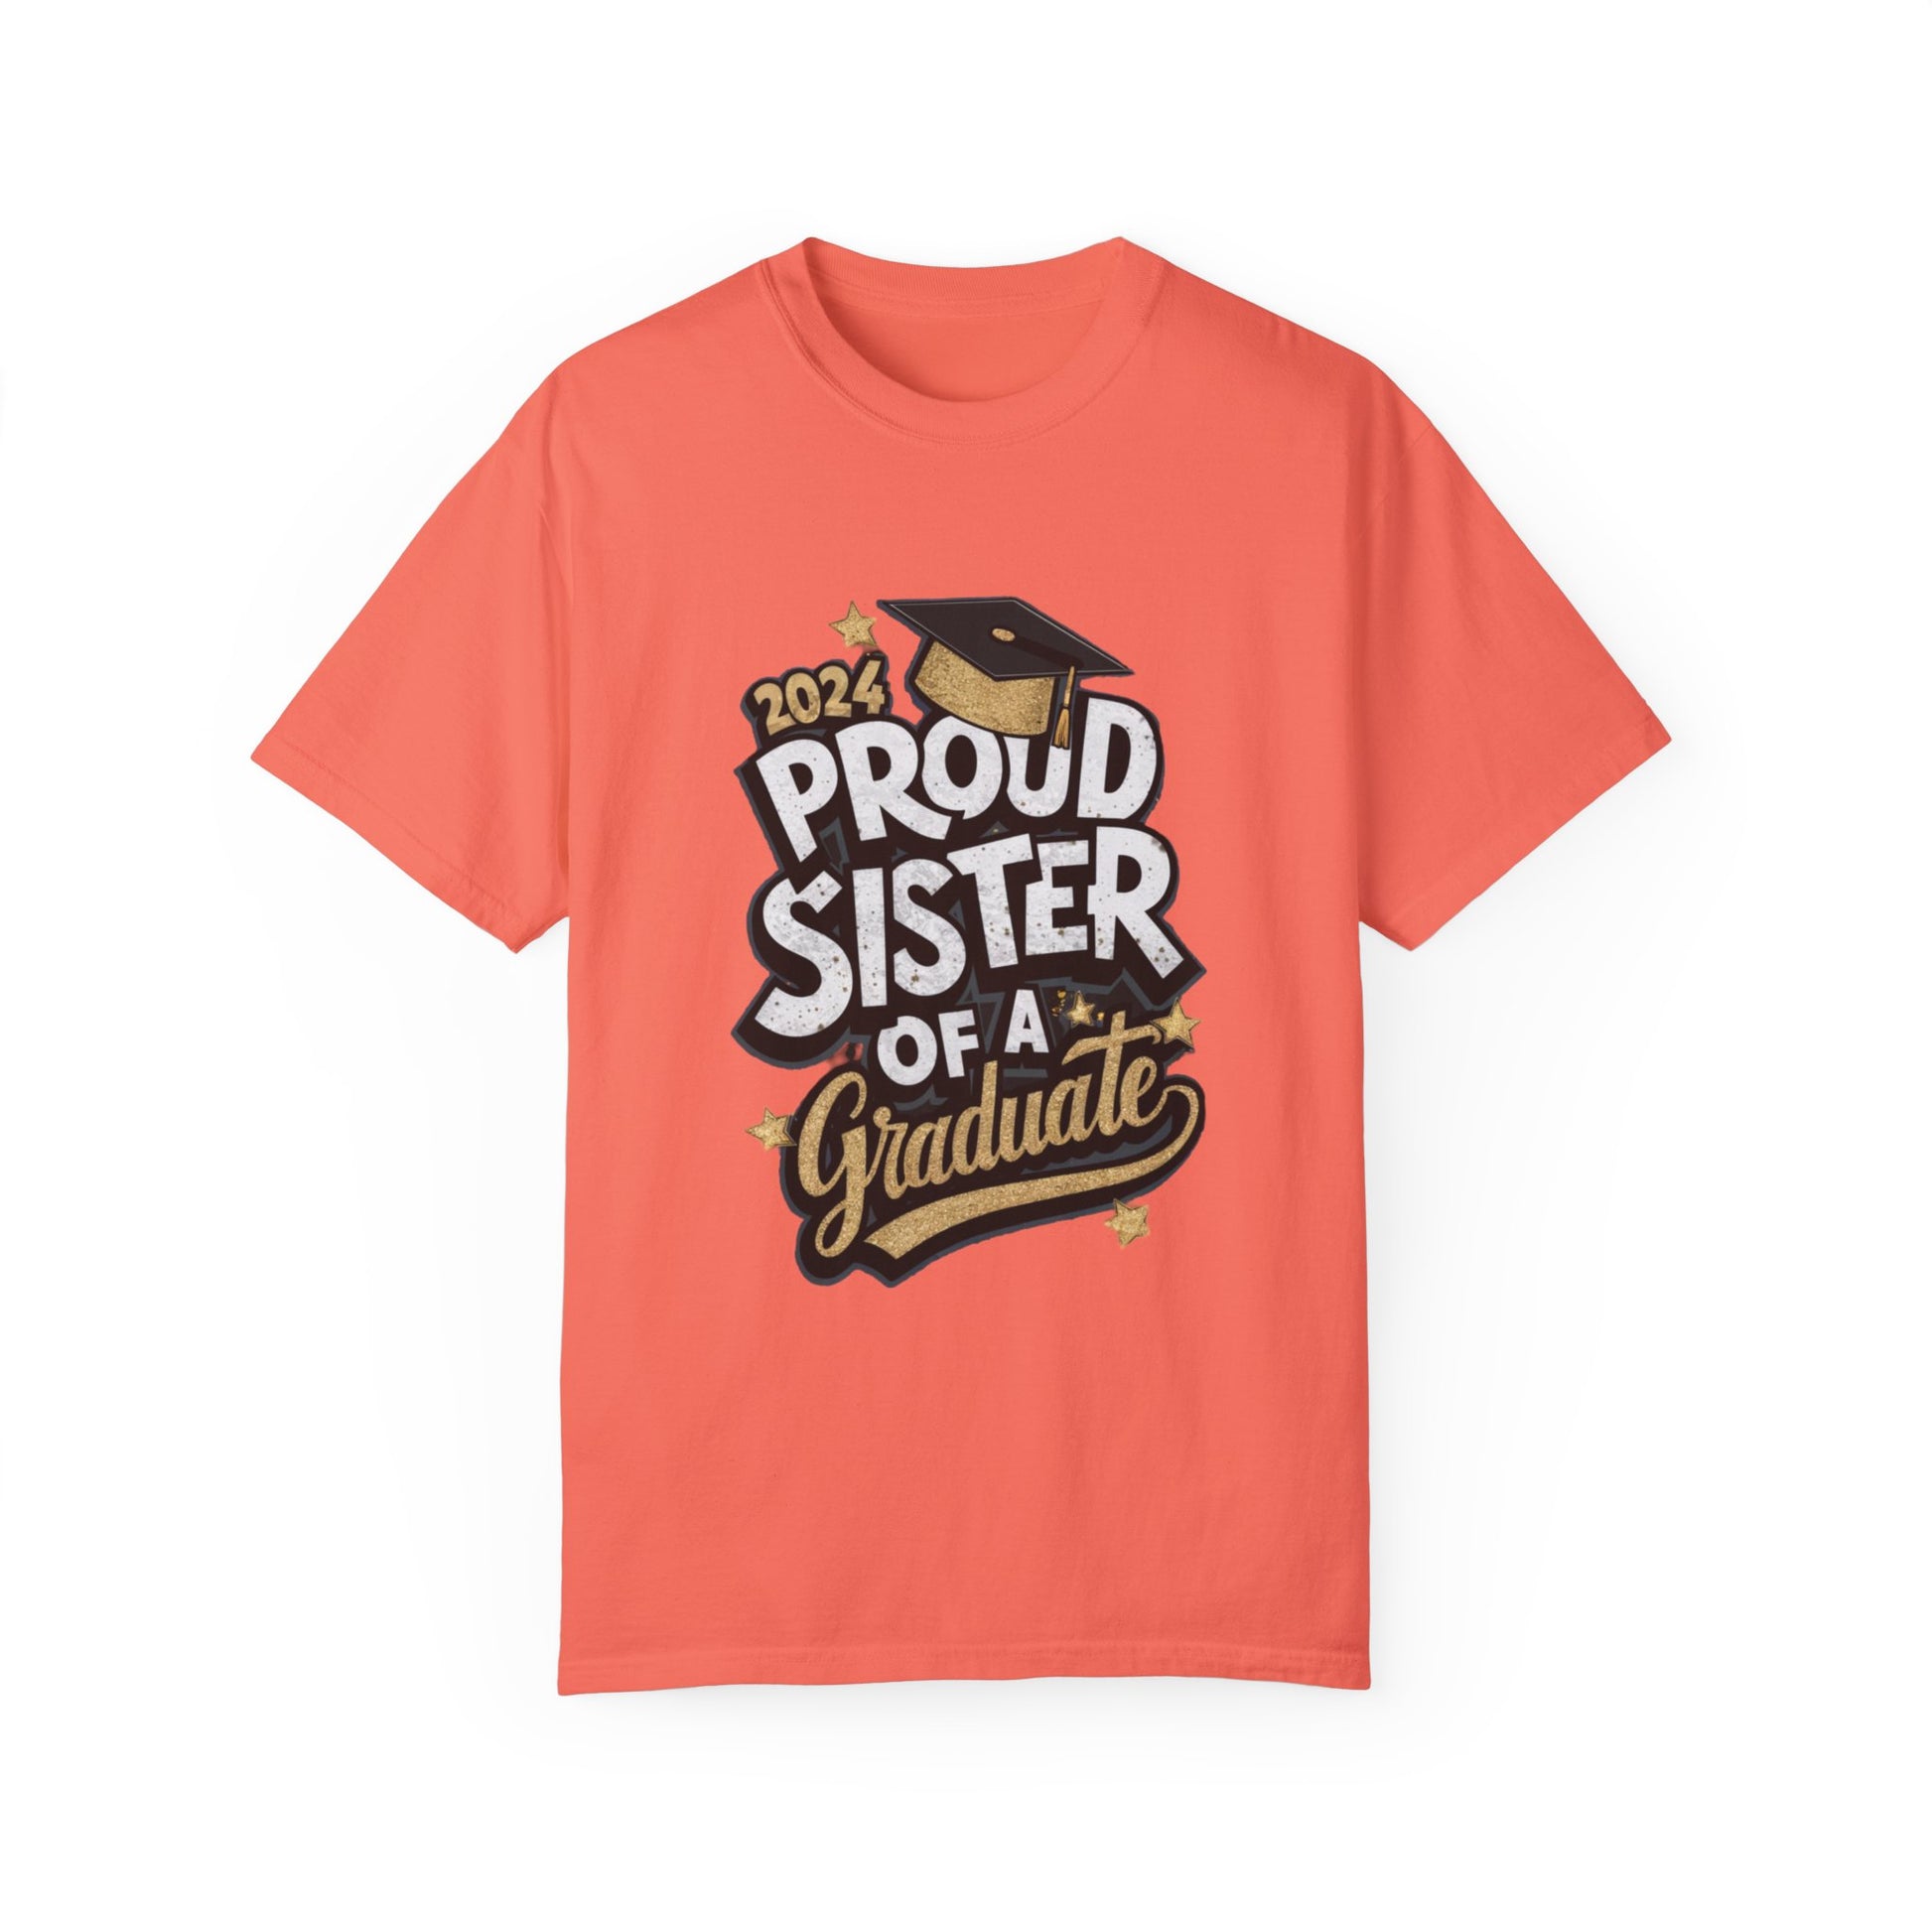 Proud Sister of a 2024 Graduate Unisex Garment-dyed T-shirt Cotton Funny Humorous Graphic Soft Premium Unisex Men Women Bright Salmon T-shirt Birthday Gift-6